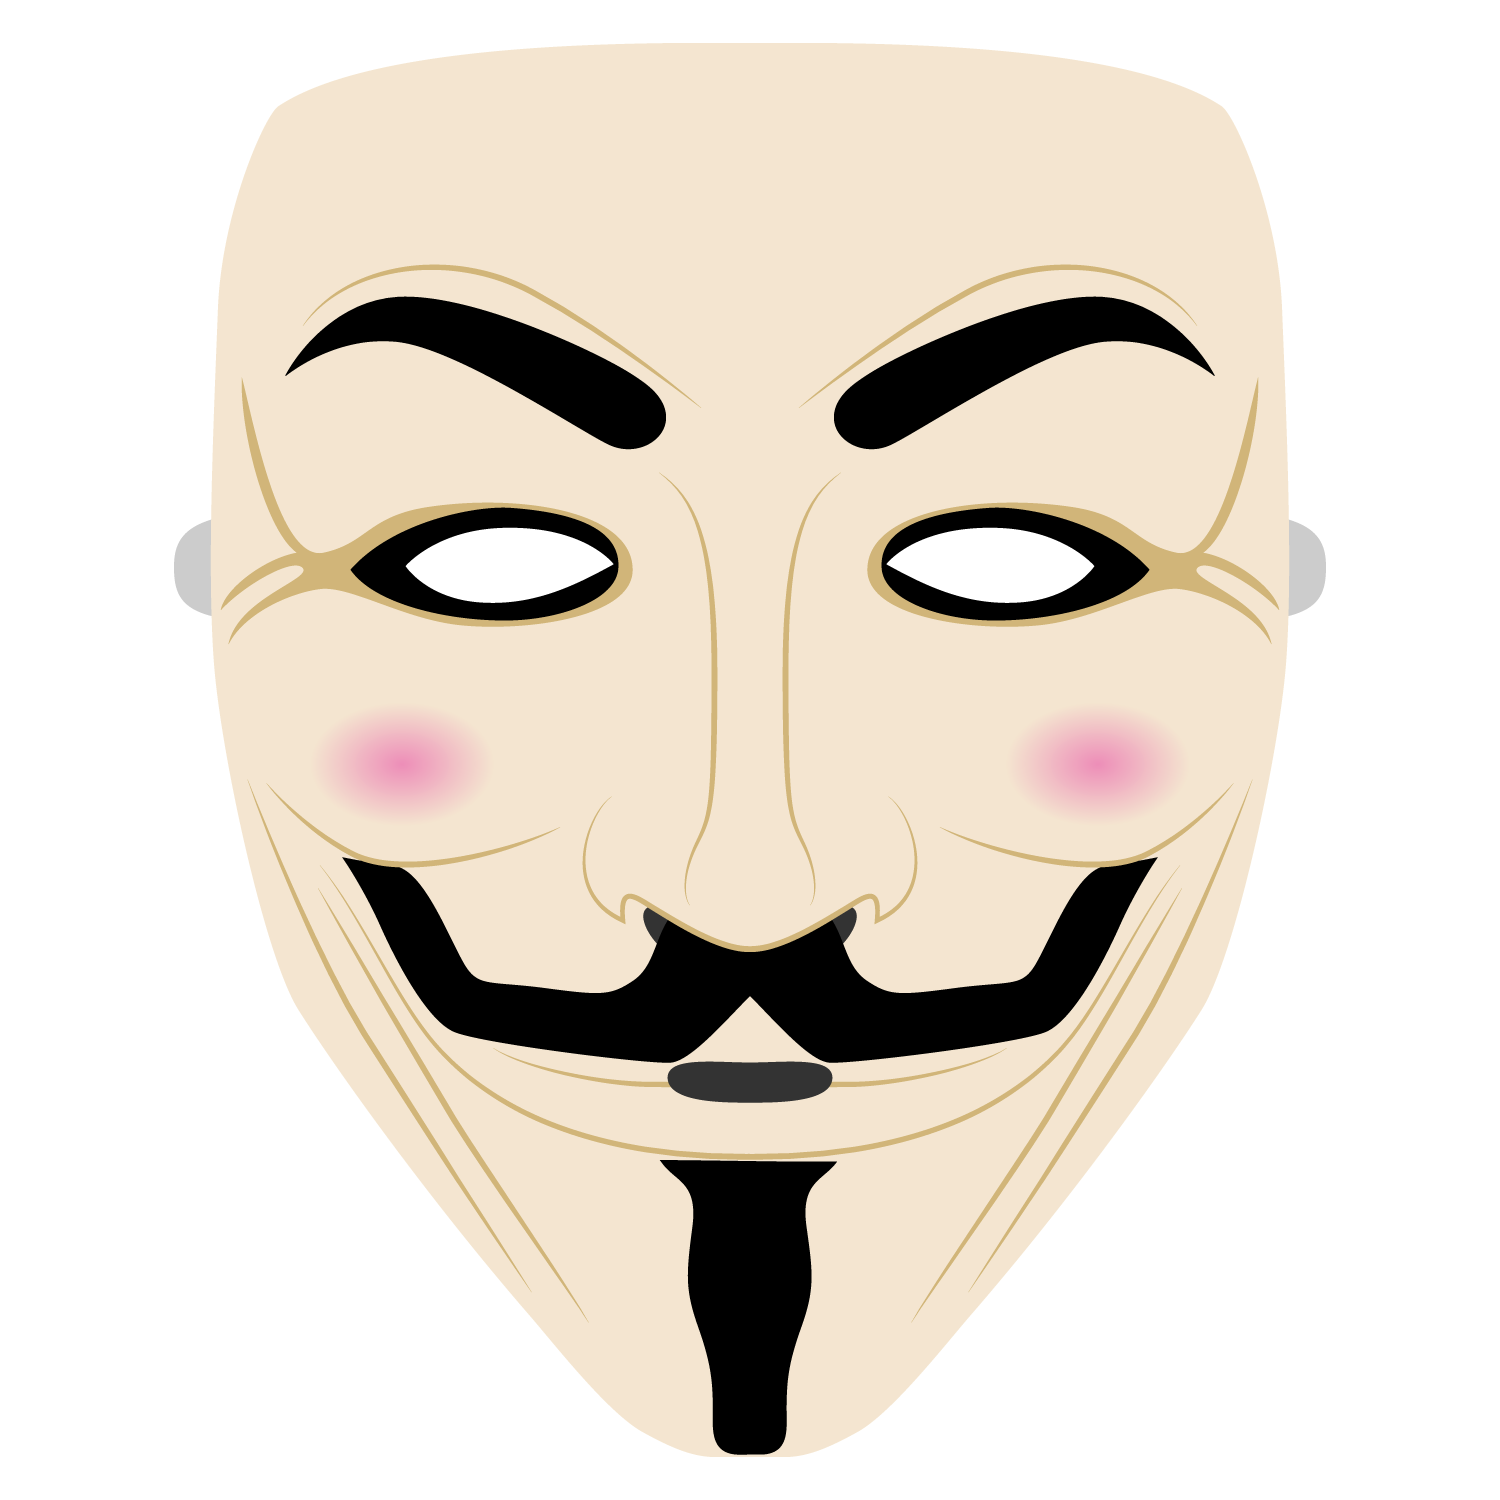 Маска из бумаги а4. Маска Гая Фокса паперкрафт. Маска Анонимуса. Анонимус в бумажной маске. Картинки маски Анонимуса.